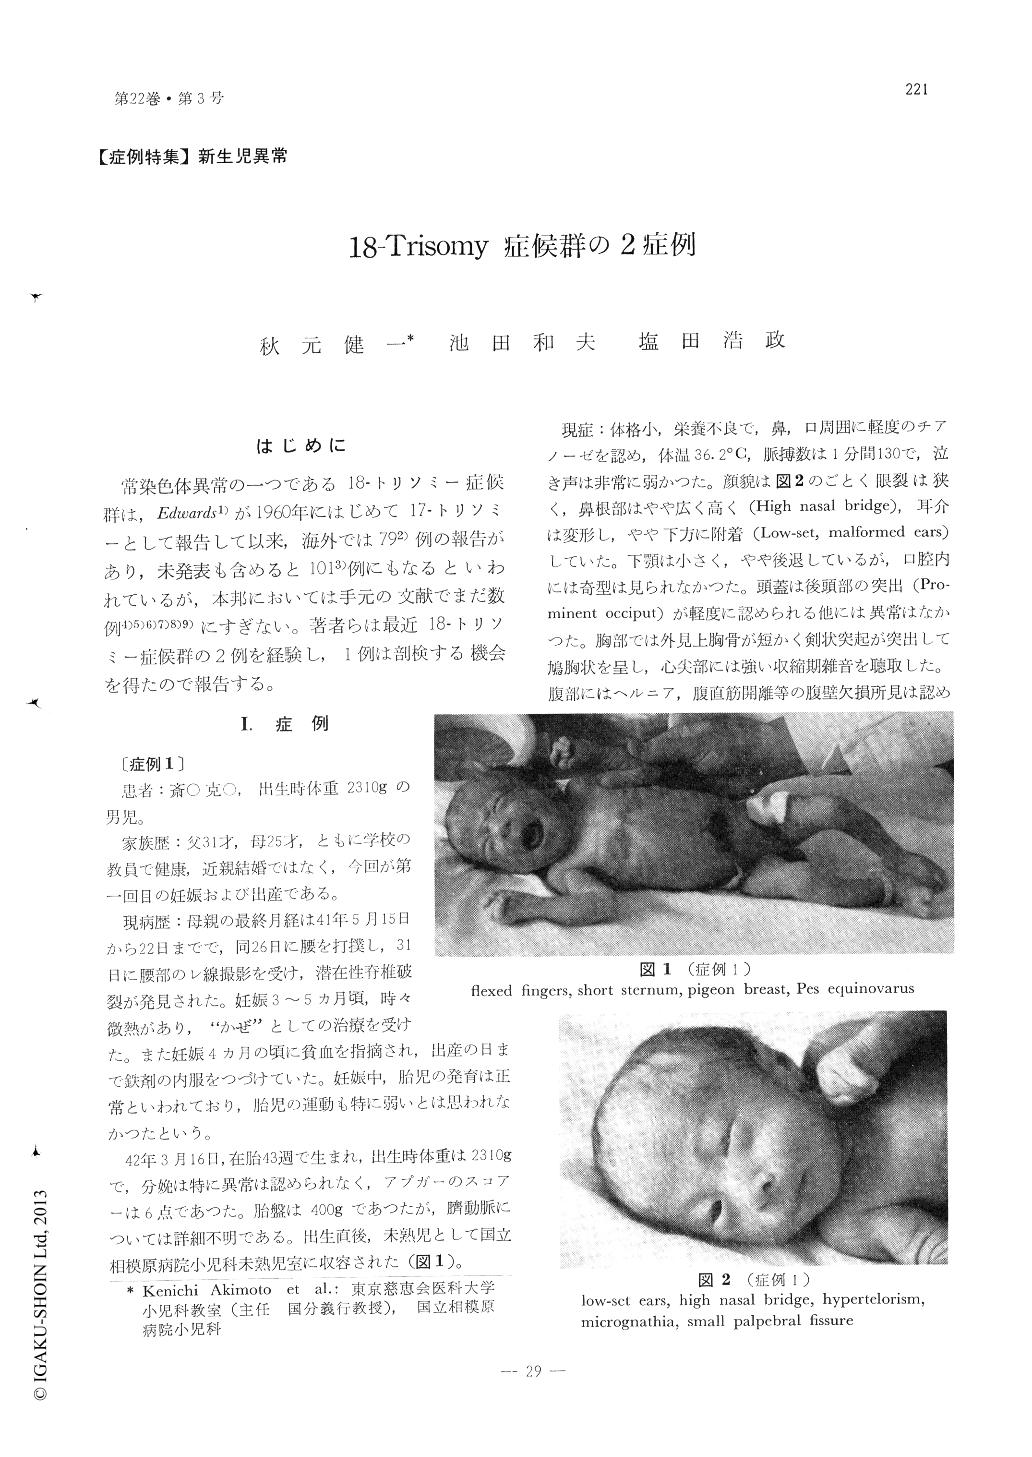 18-Trisomy症候群の2症例 (臨床婦人科産科 22巻3号) | 医書.jp